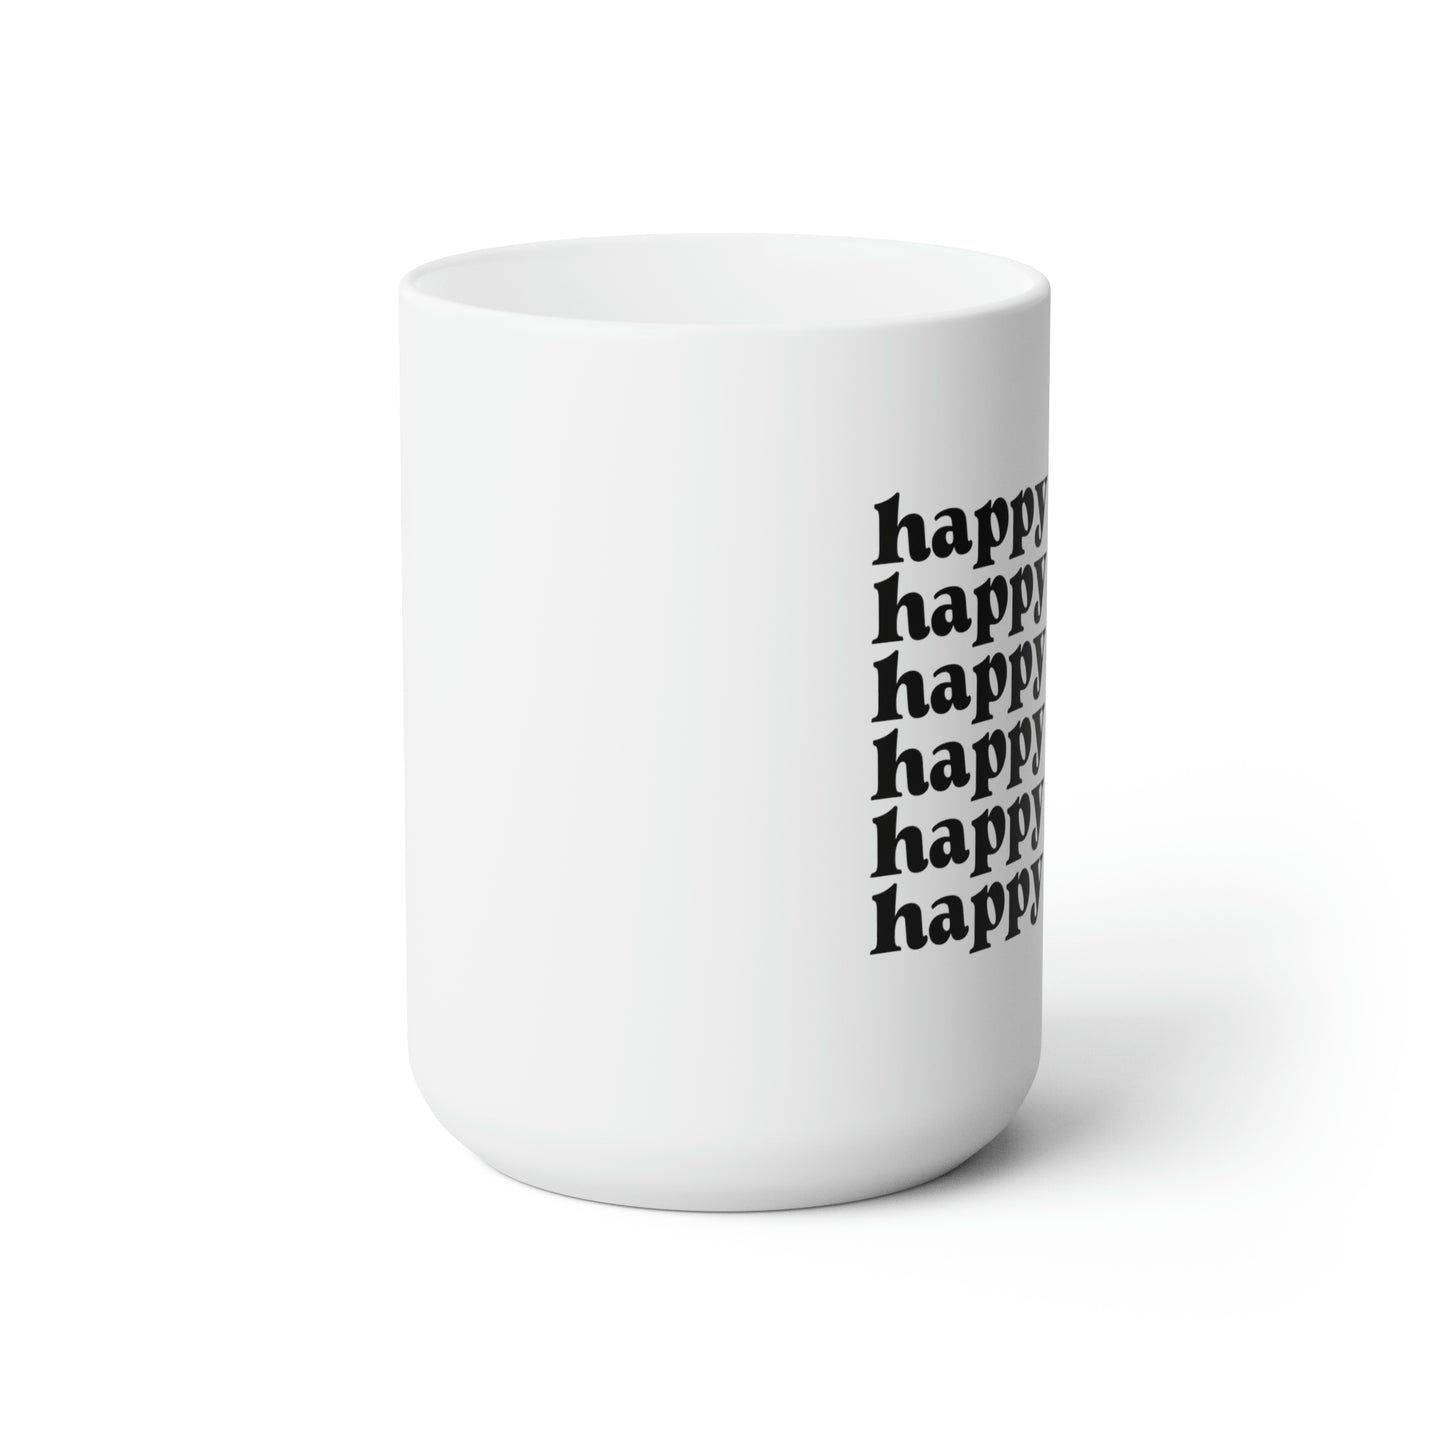 Happy Sober mug